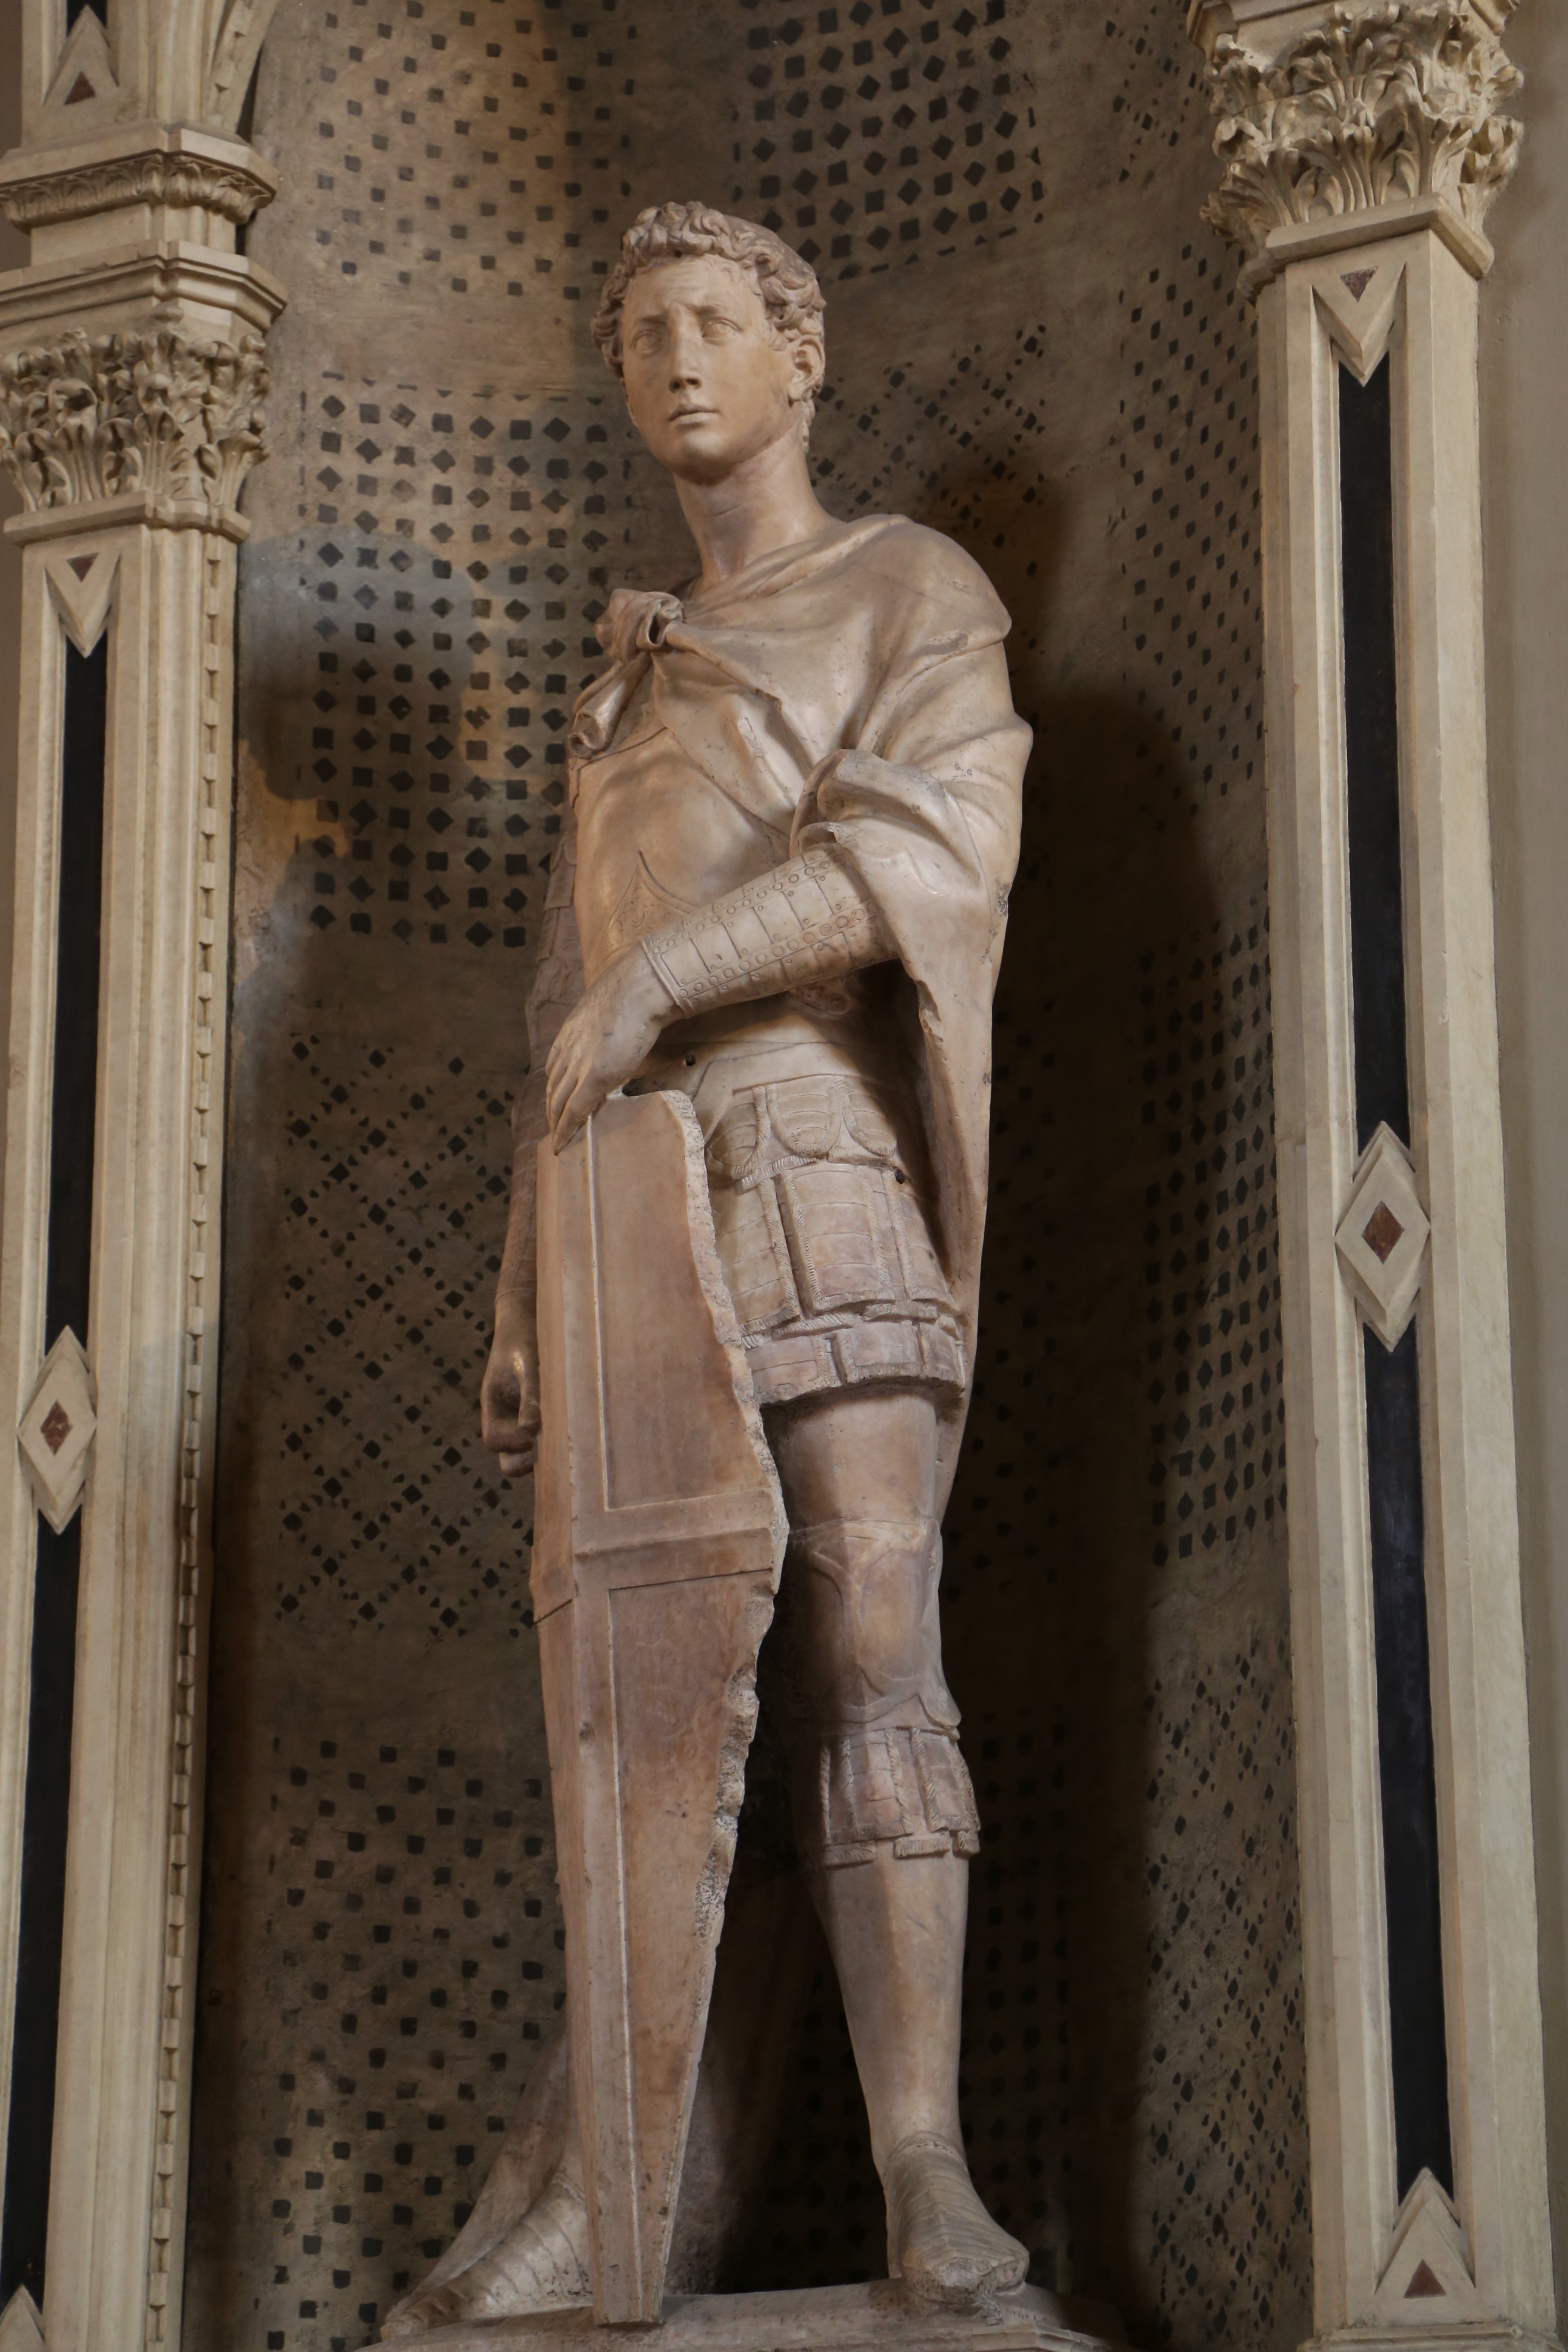 Image of Saint George wearing legendary armor